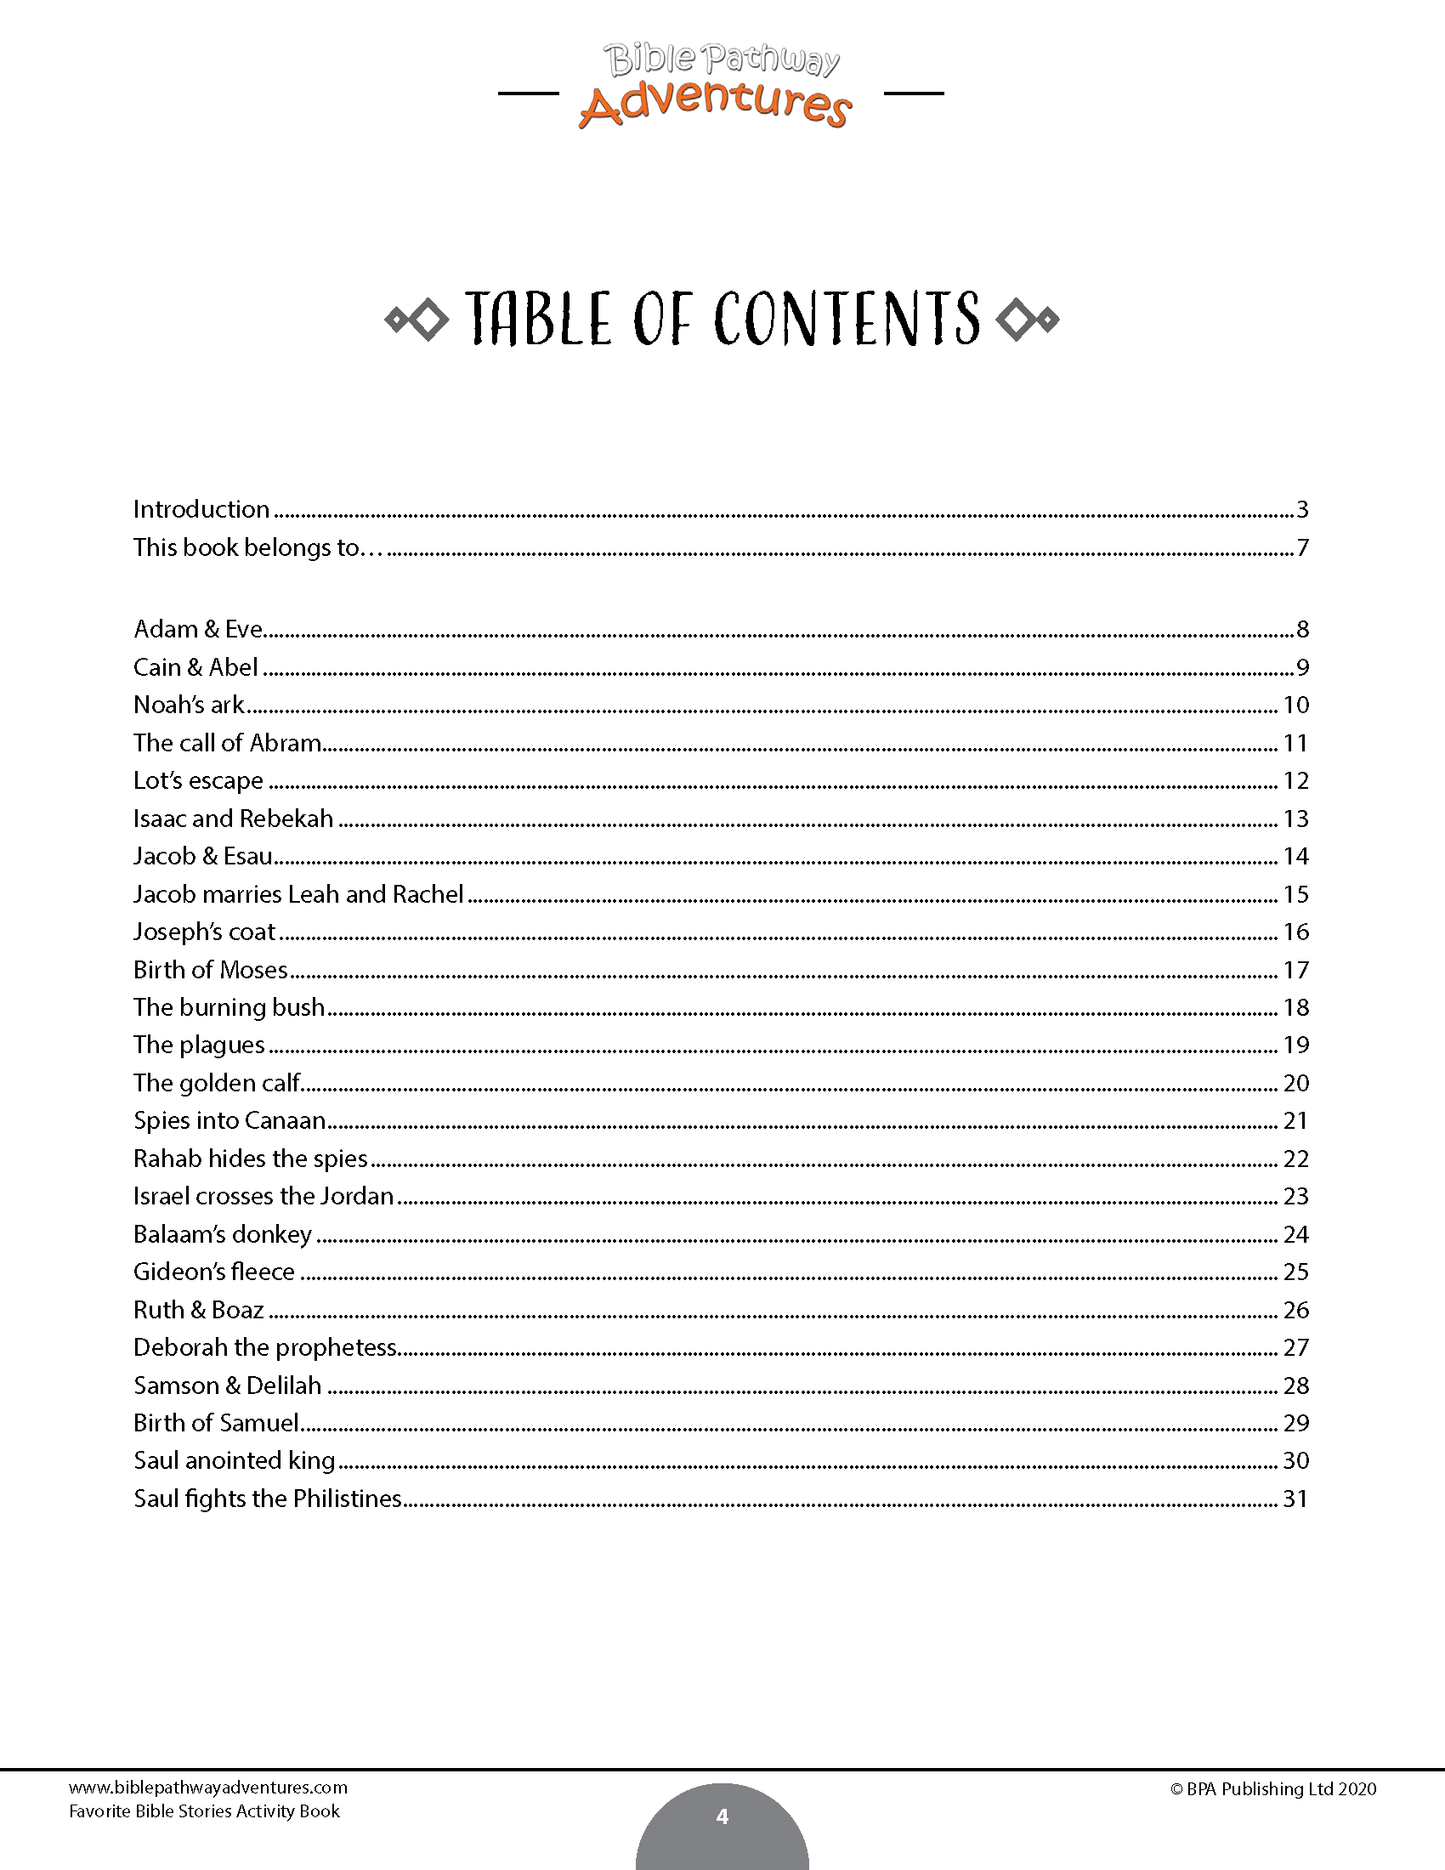 Favorite Bible Stories Activity Book (PDF)